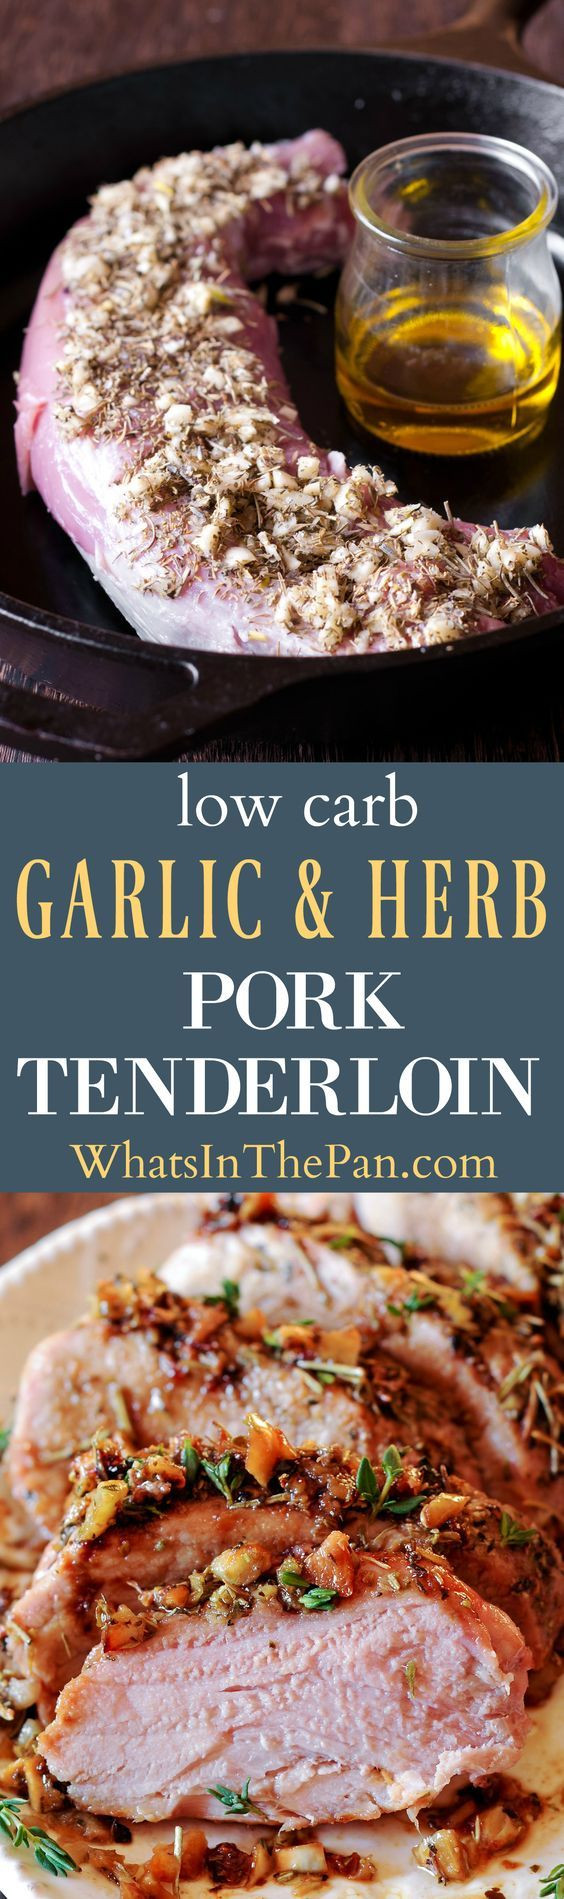 Low Carb Pork Tenderloin Recipes
 This low carb pork tenderloin recipe features juicy